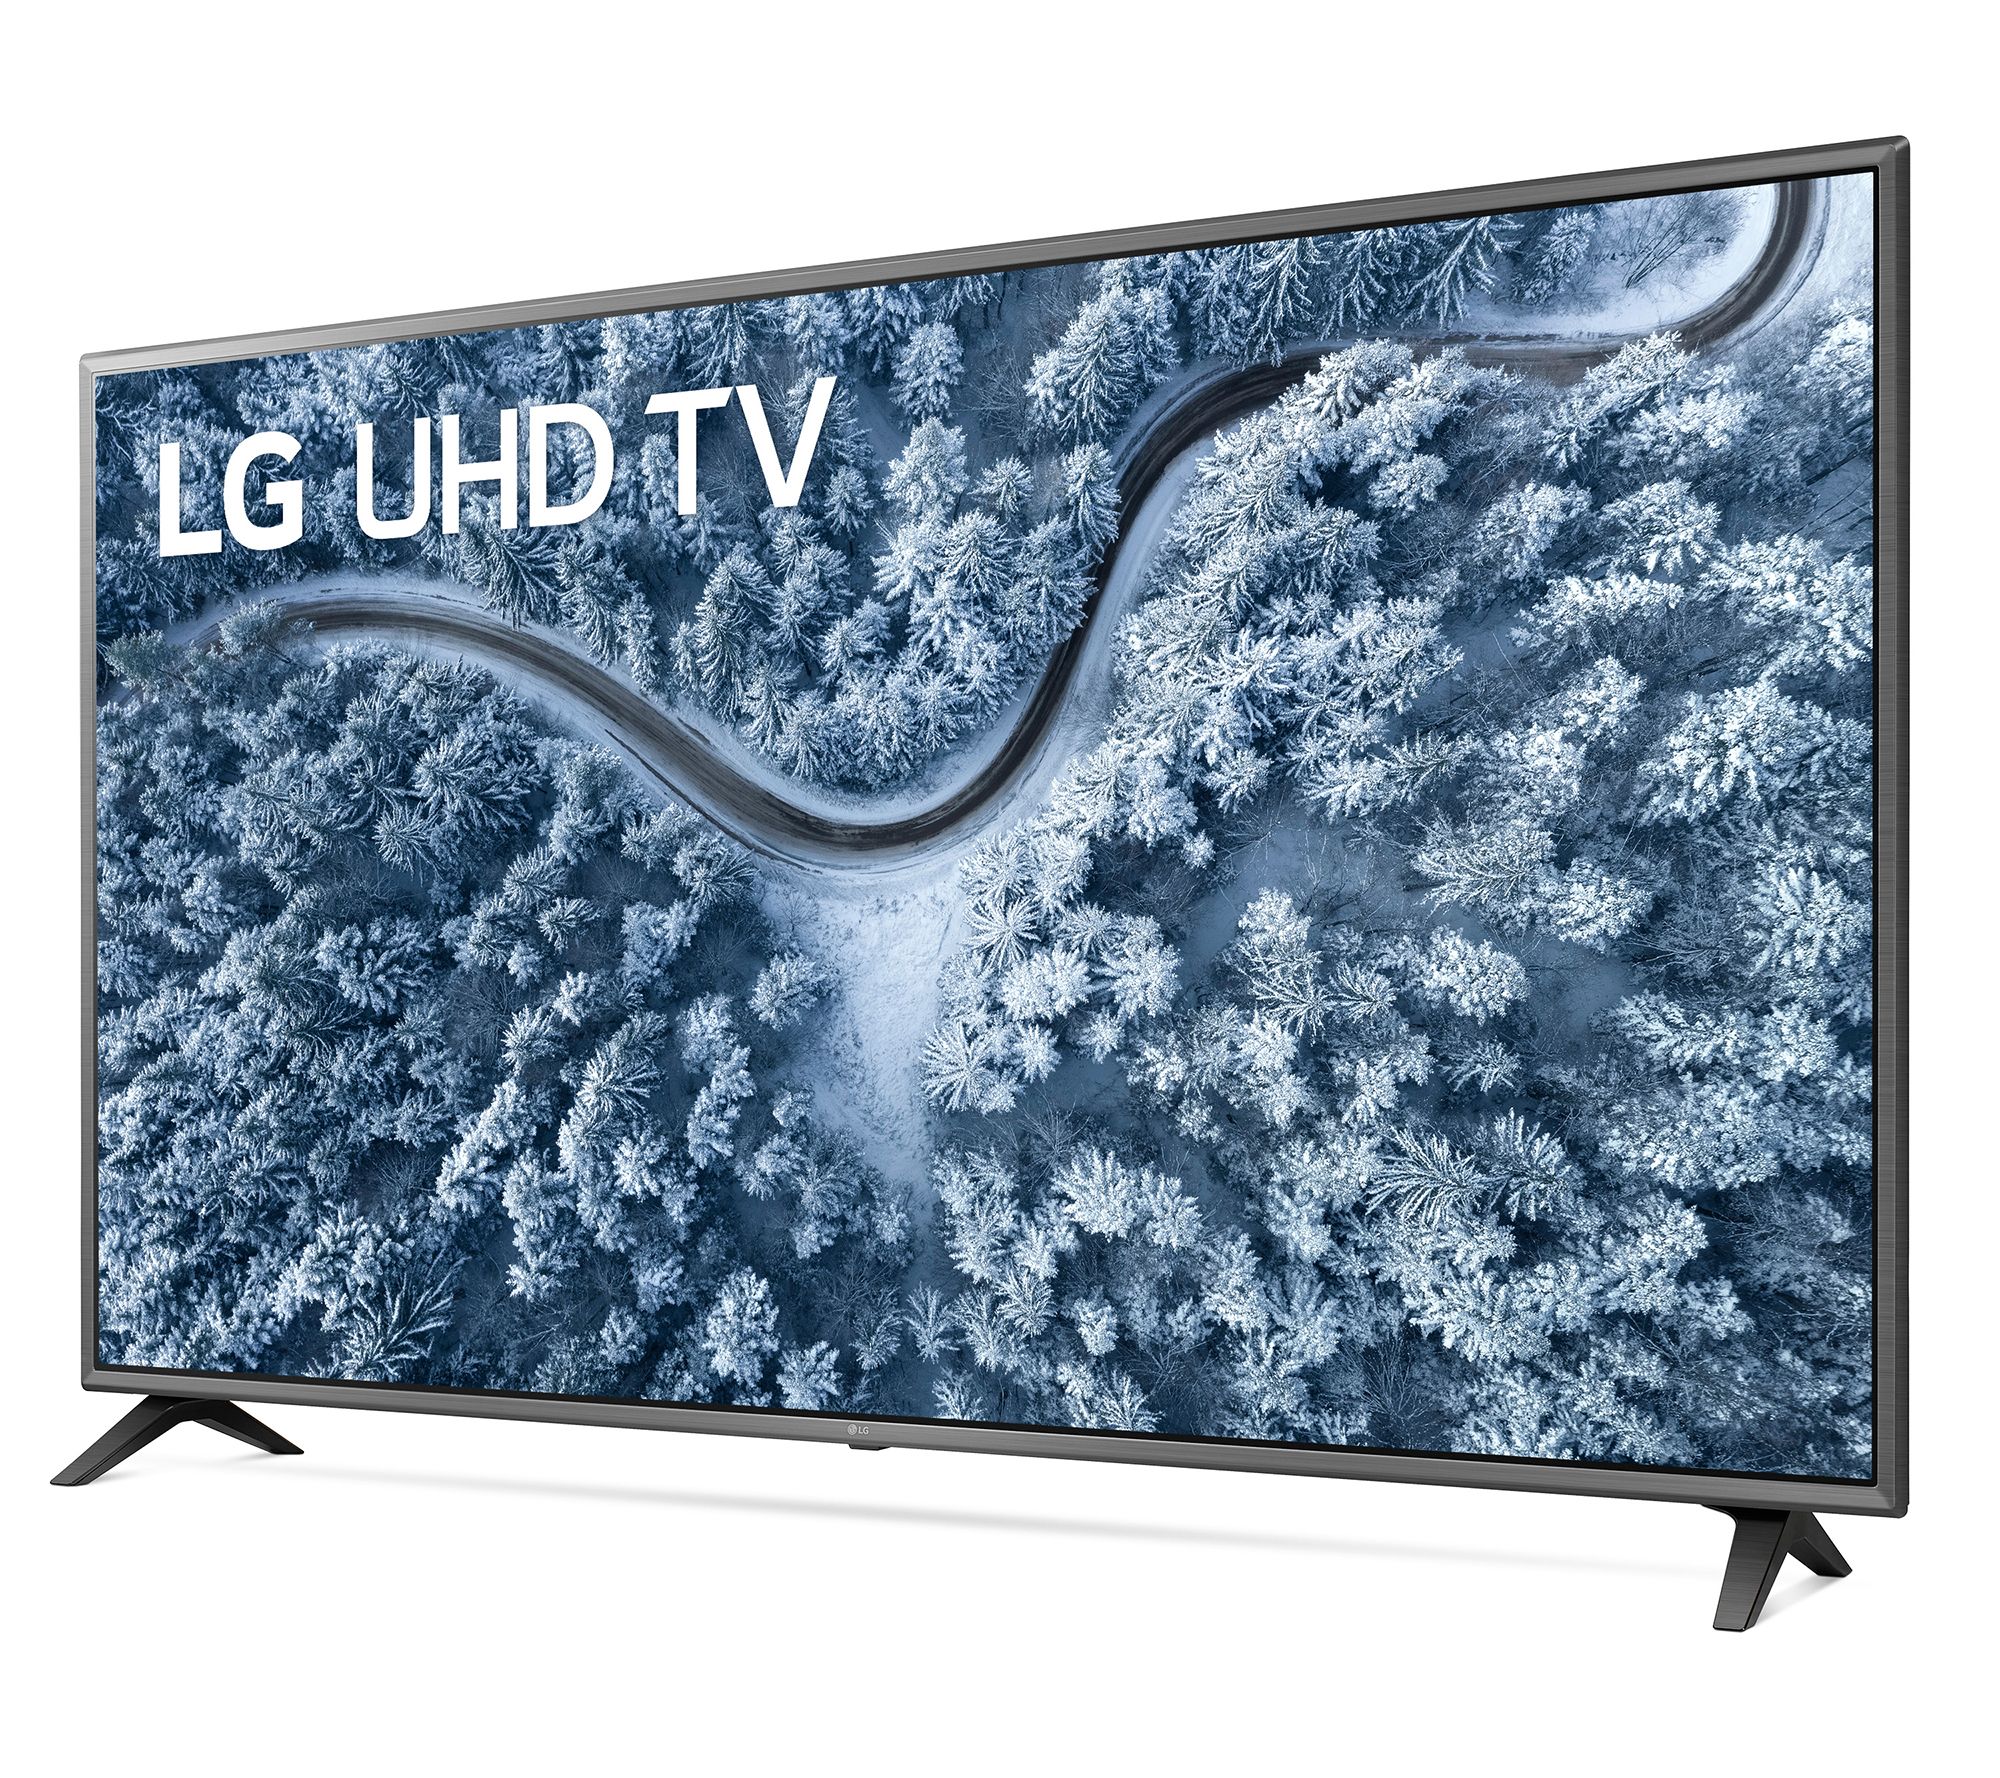 dostava cjevovod vijak  LG UHD 70 Series 75in Class 4K Smart UHD TV (74.5'' Diag) - QVC.com